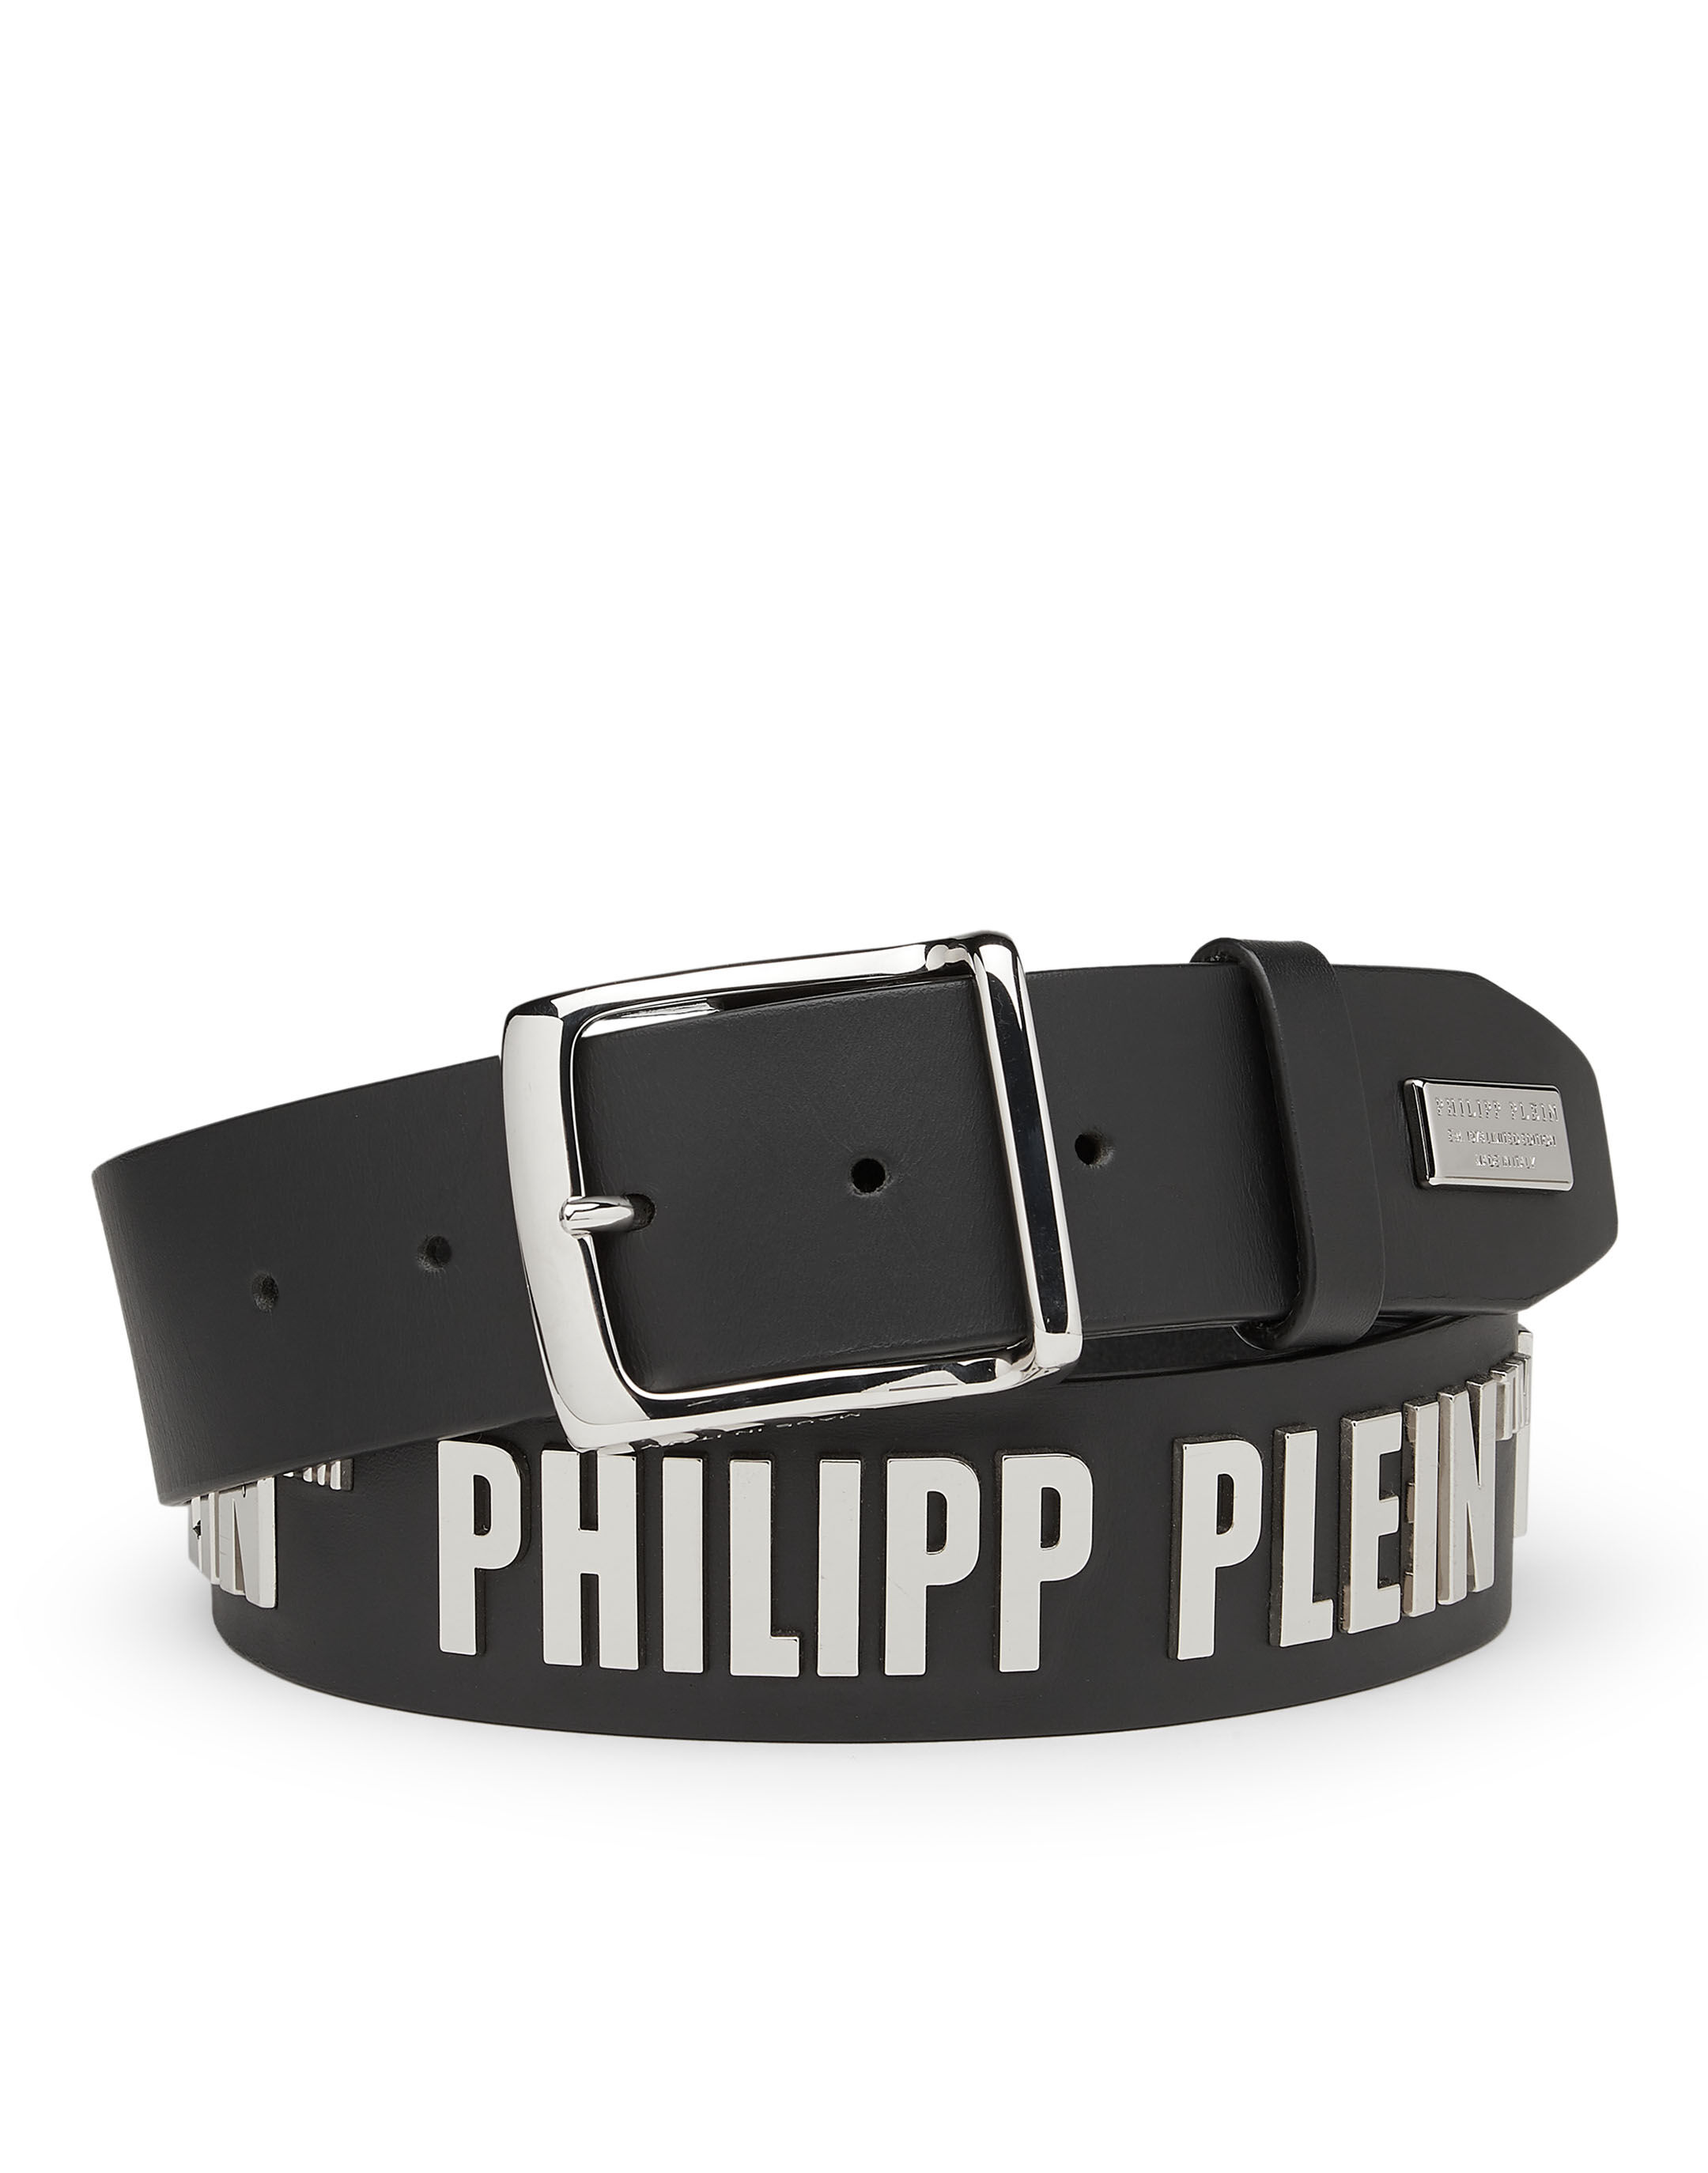 philipp plein belt price